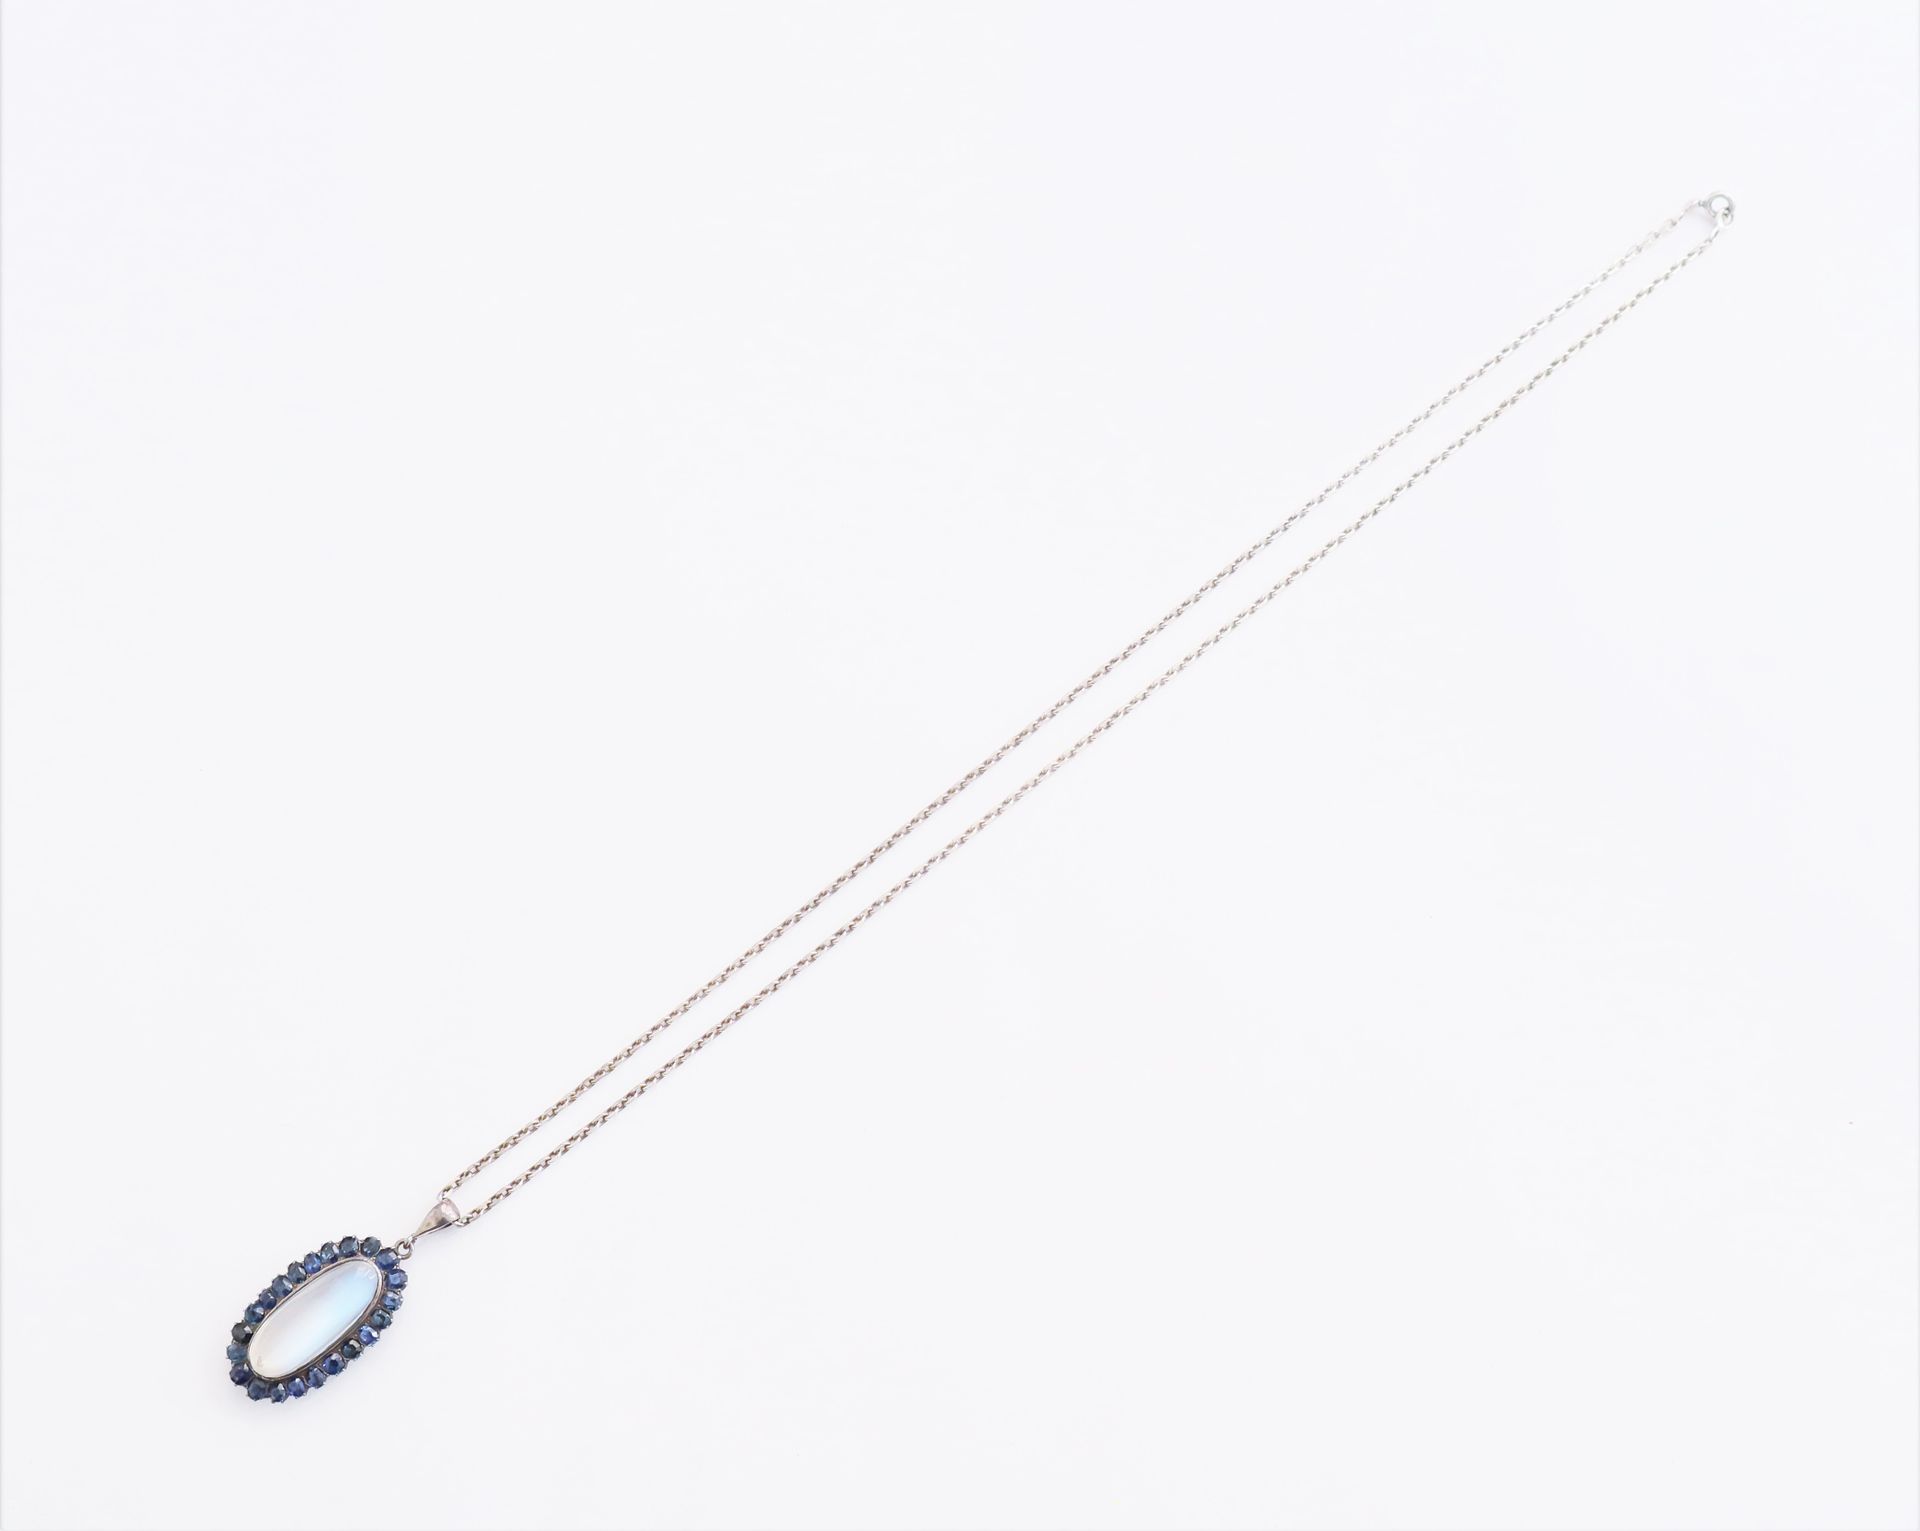 Null 银质吊坠上镶嵌着椭圆形凸圆形月光石，周围环绕着蓝宝石，滑动在银质链条上。法国的工作。尺寸：3.3 x 1.5厘米左右。毛重 : 14,1 g